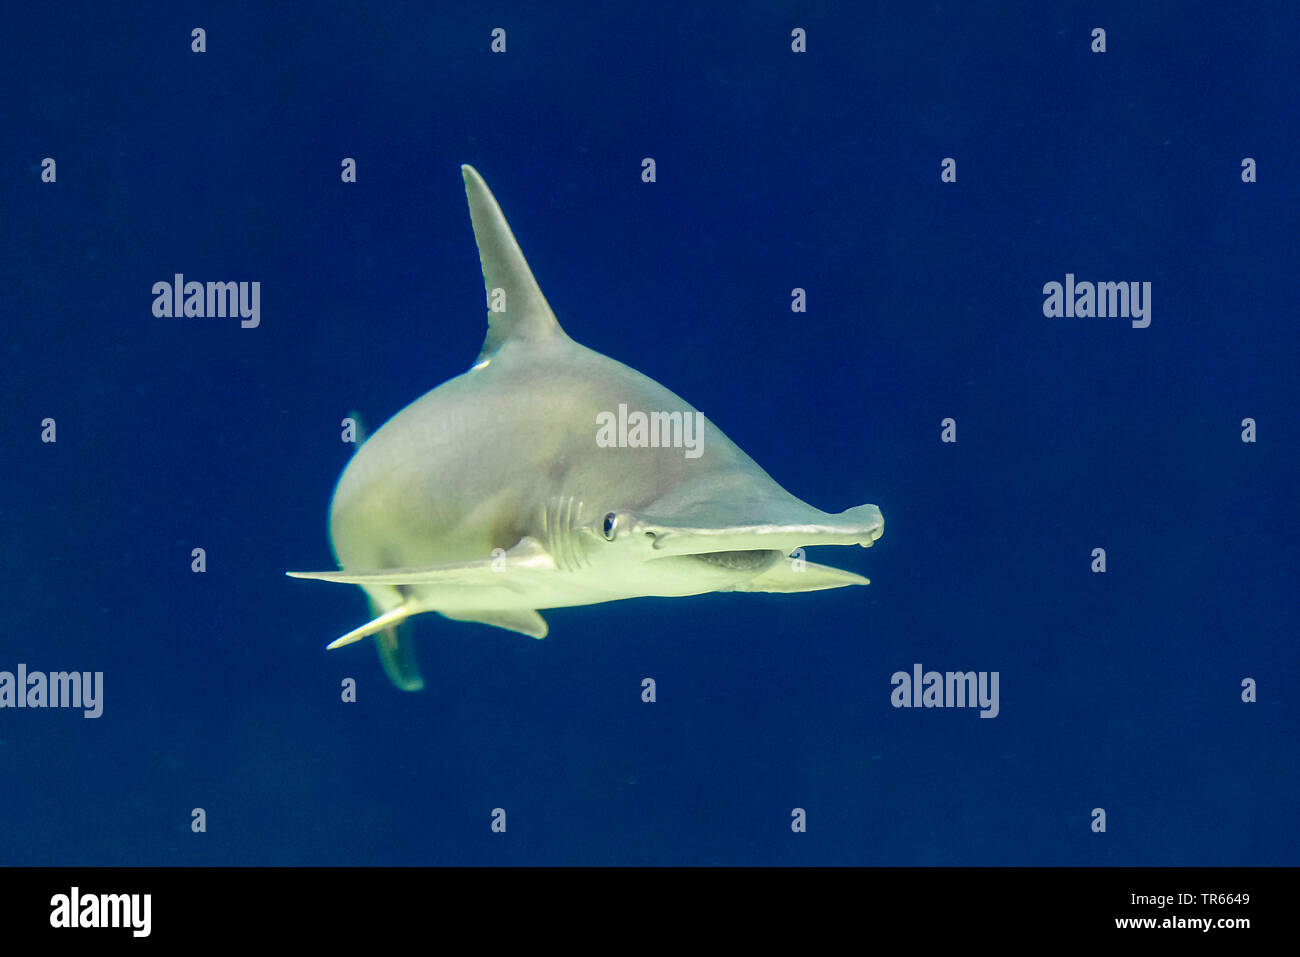 Motorhaube, bonnethead Shark, Schaufel Kopf (Sphyrna tiburo), Schwimmen, Vorderansicht, USA, Arizona Stockfoto